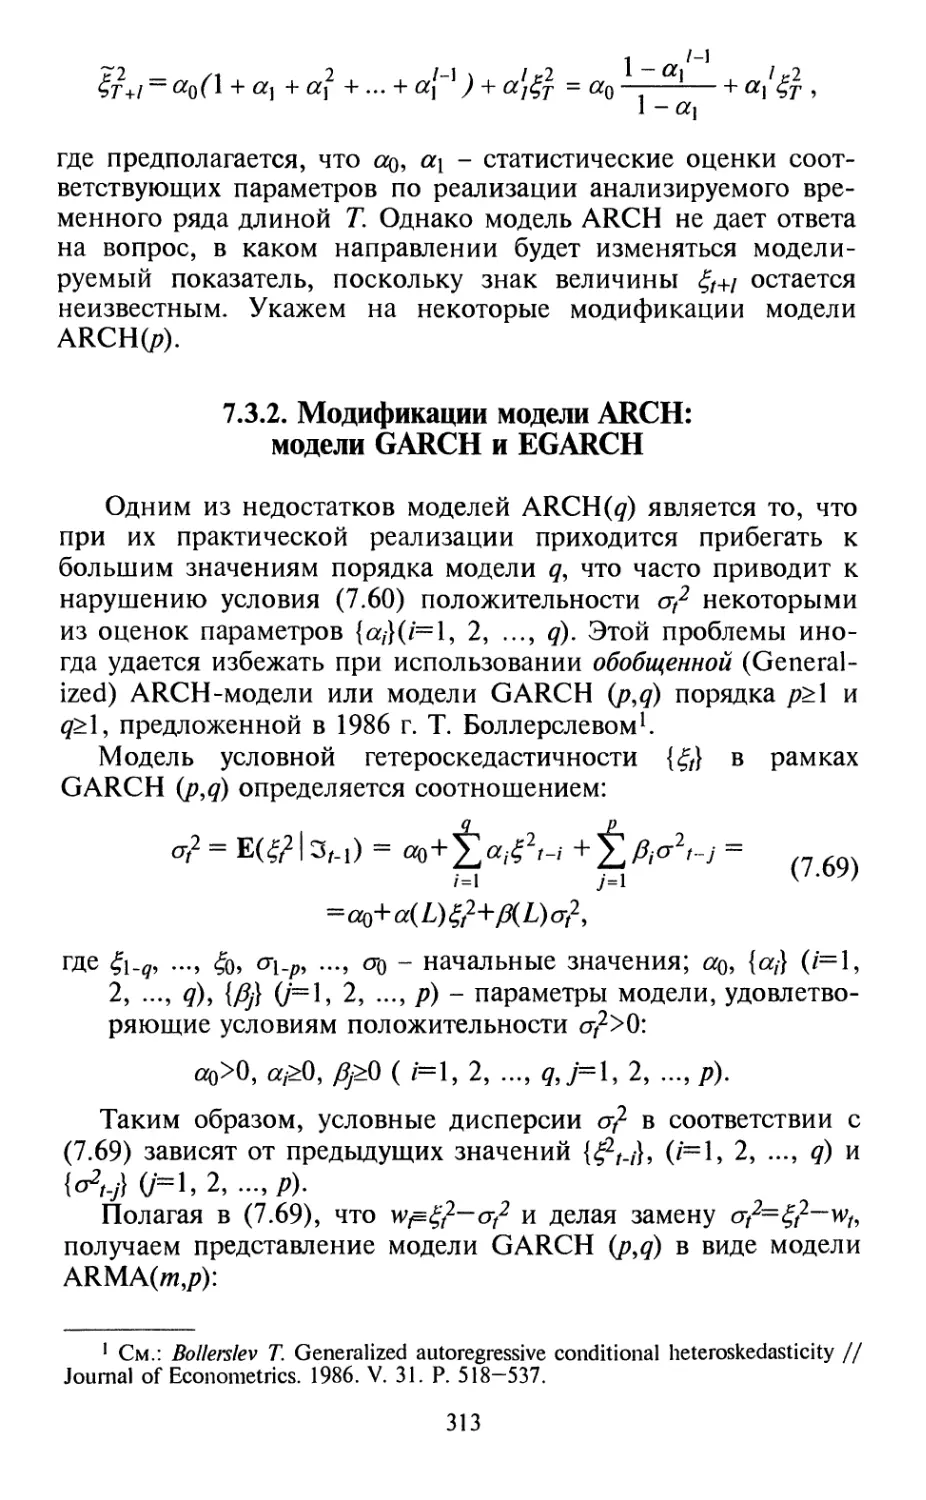 7.3.2. Модификации модели ARCH: модели GARCH и EGARCH